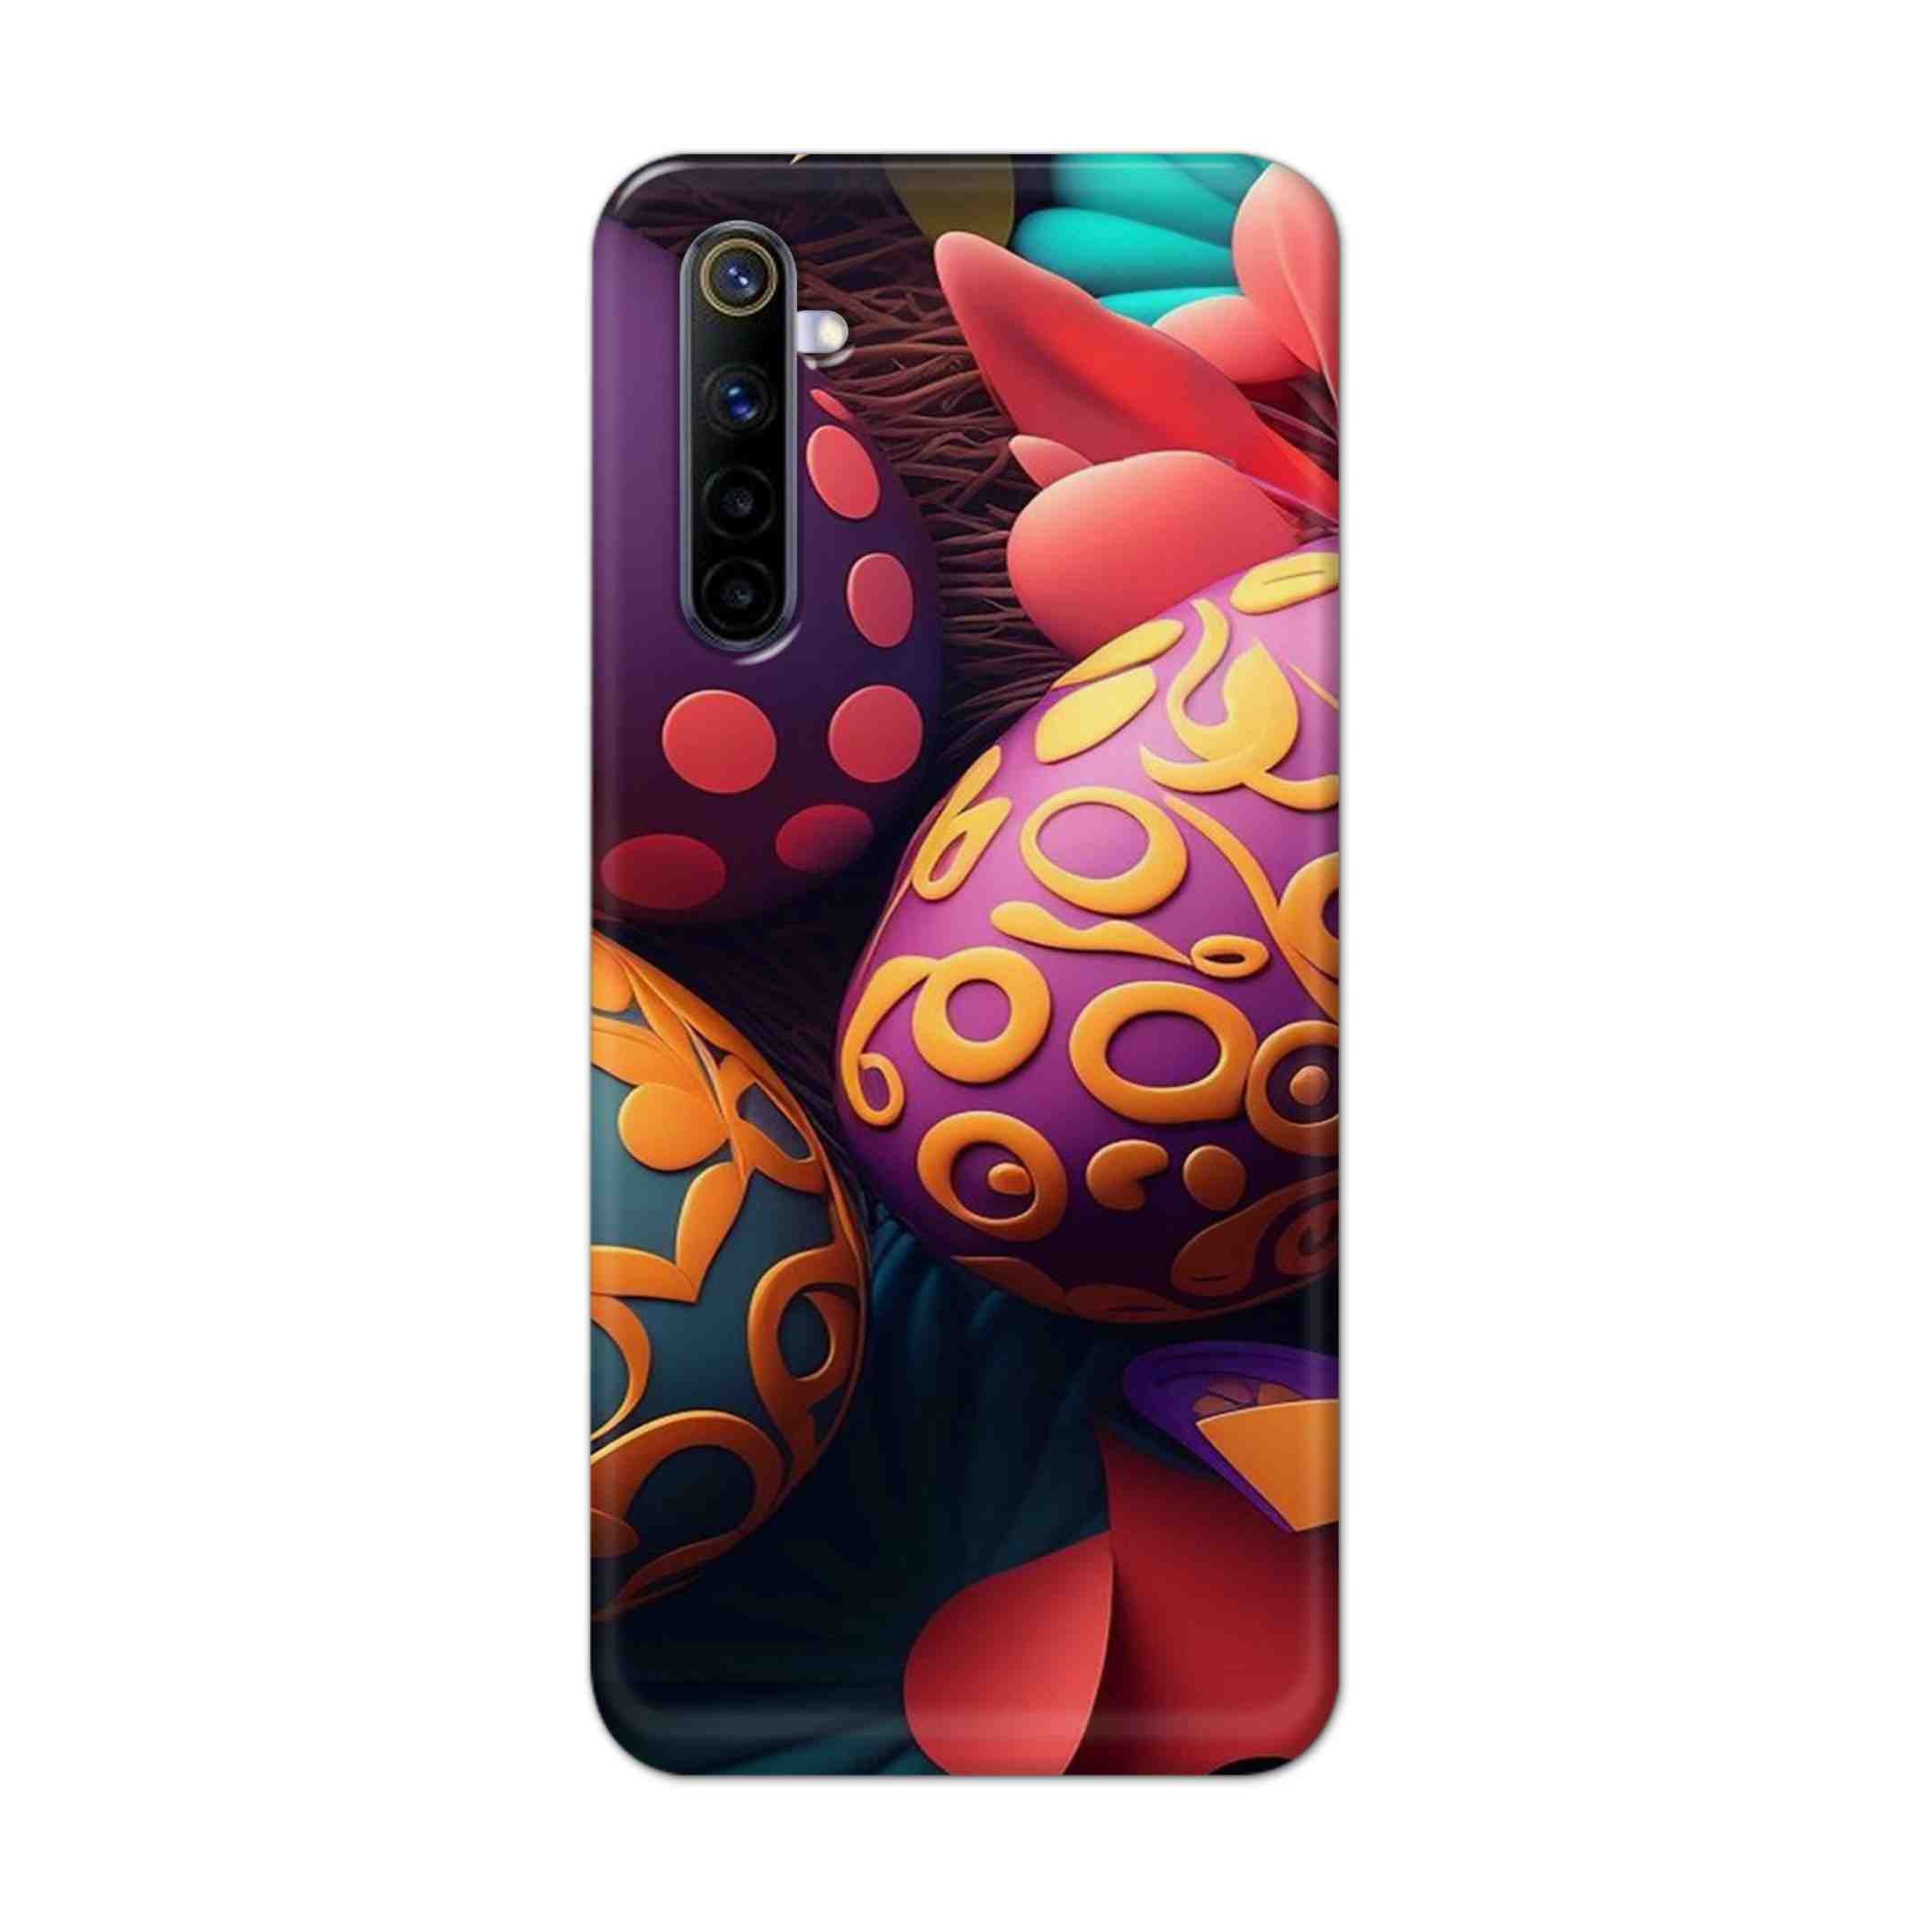 Buy Easter Egg Hard Back Mobile Phone Case Cover For REALME 6 Online